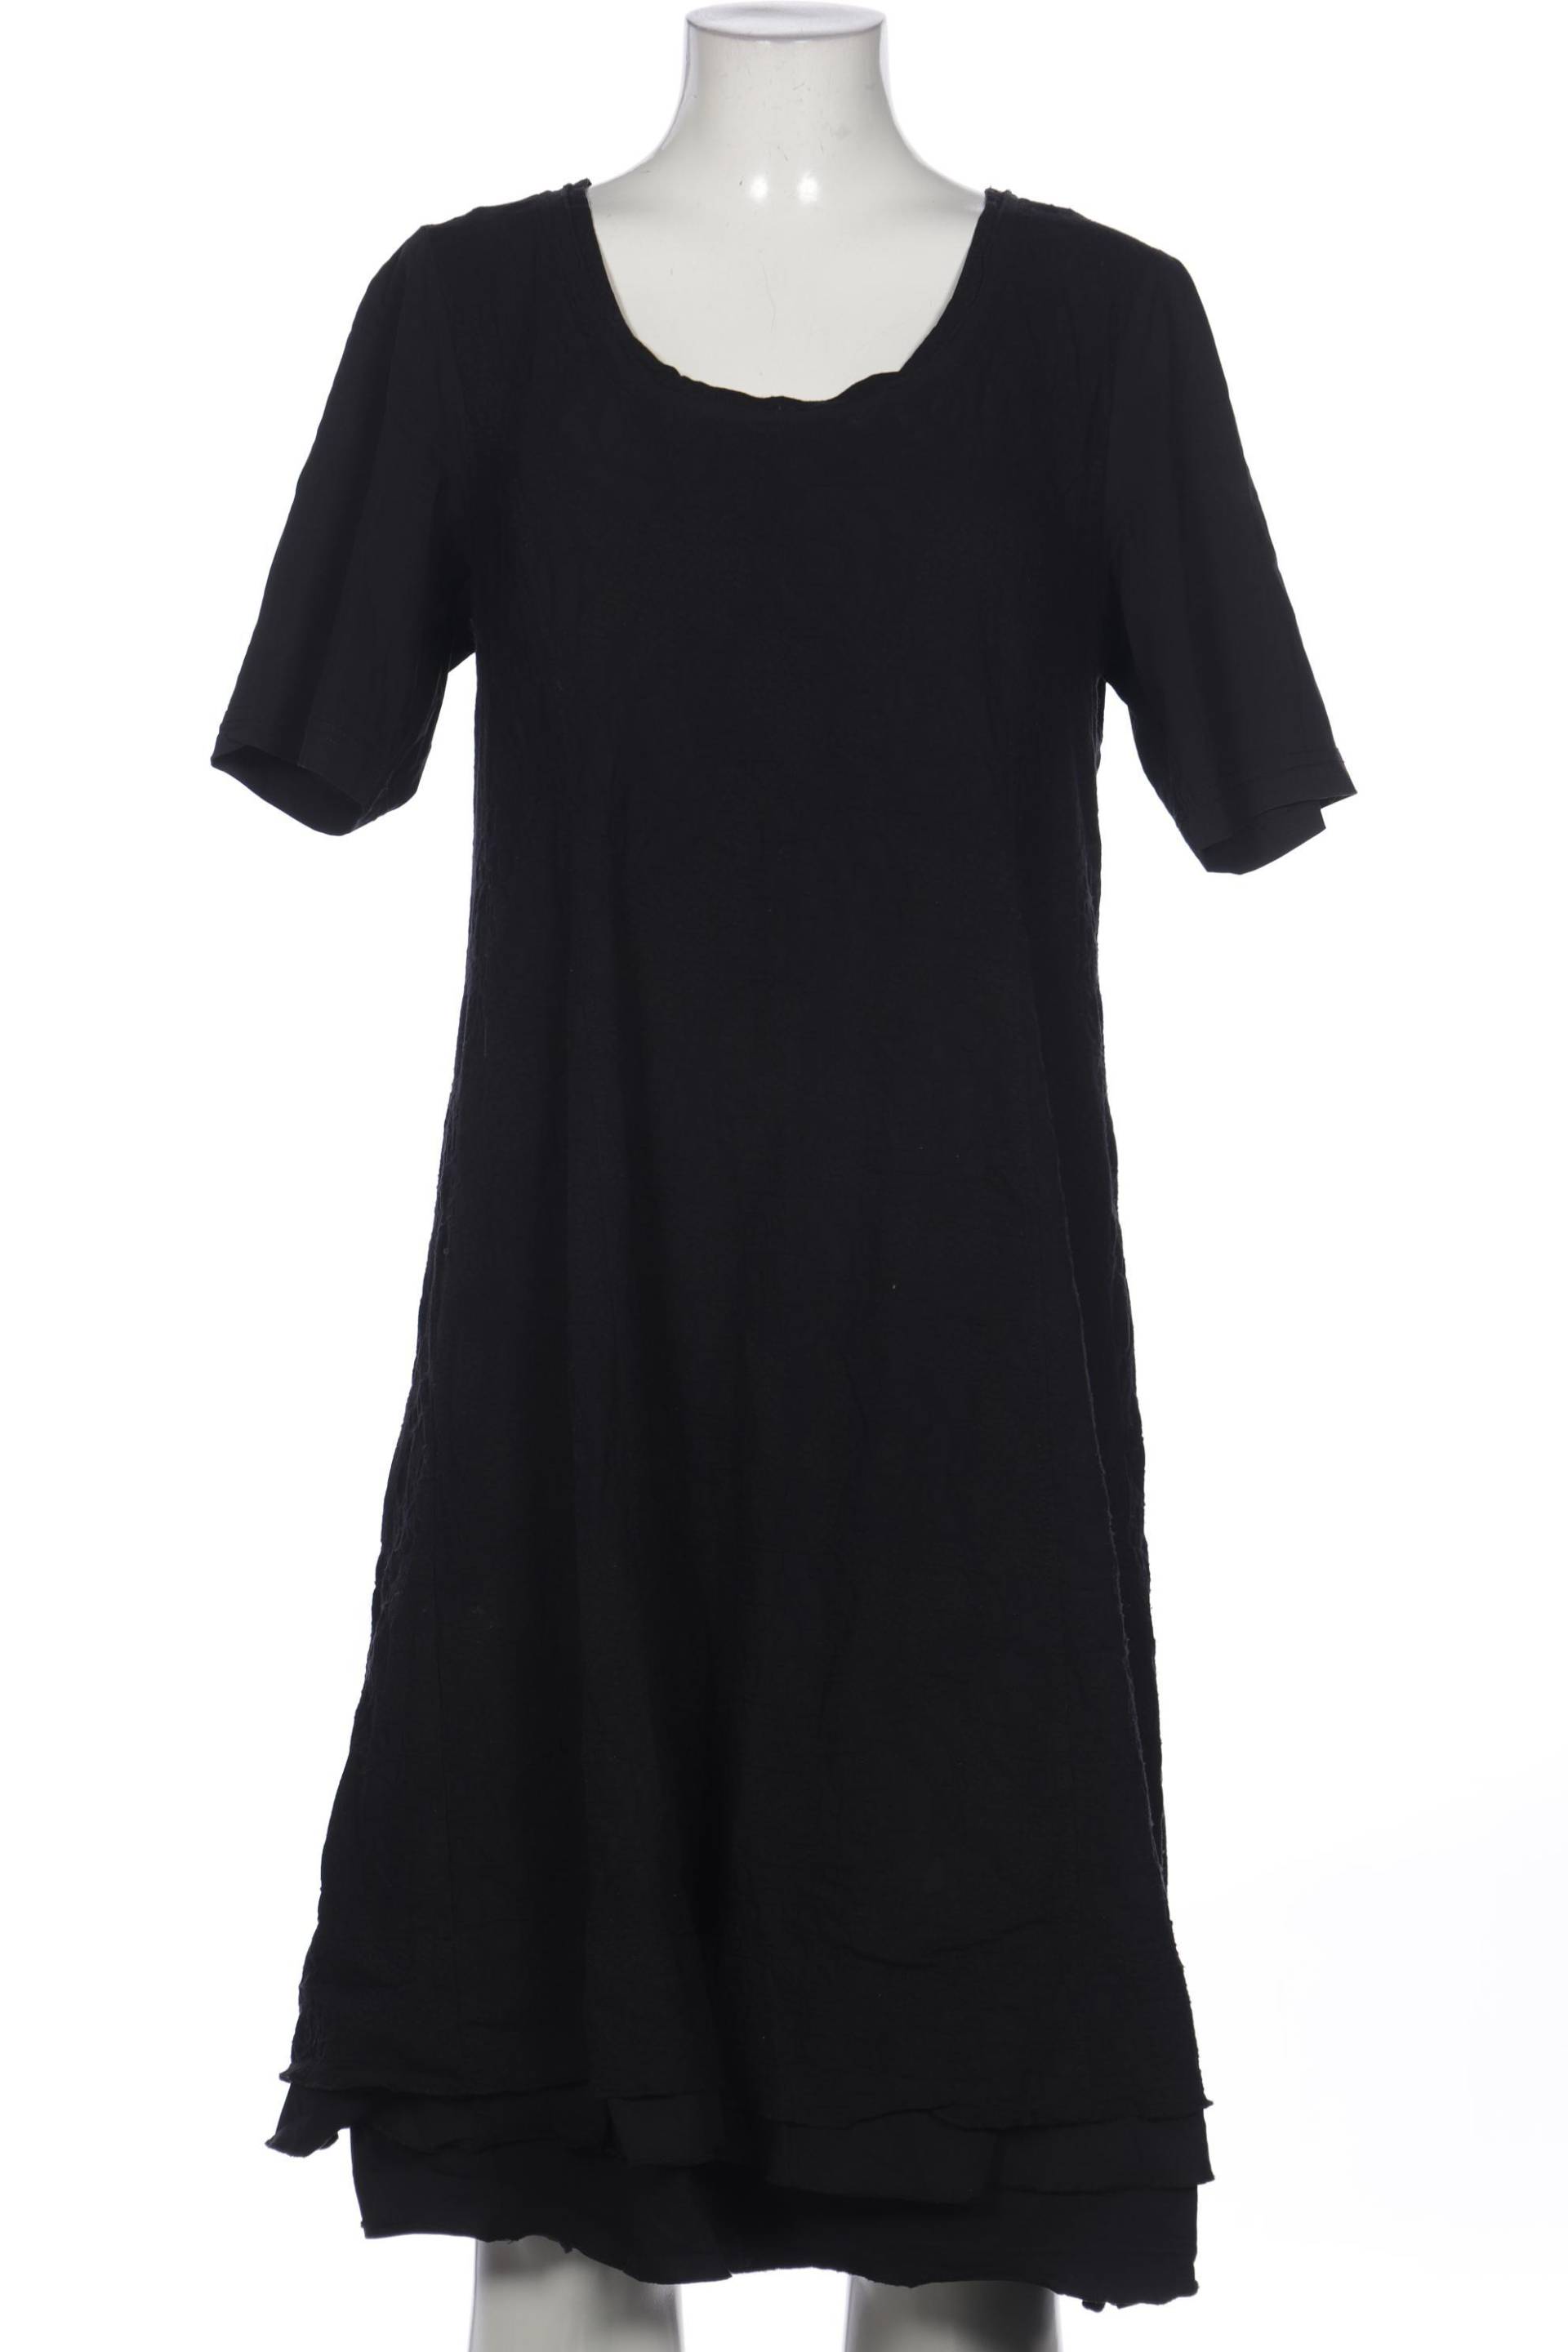 Vetono Damen Kleid, schwarz von Vetono